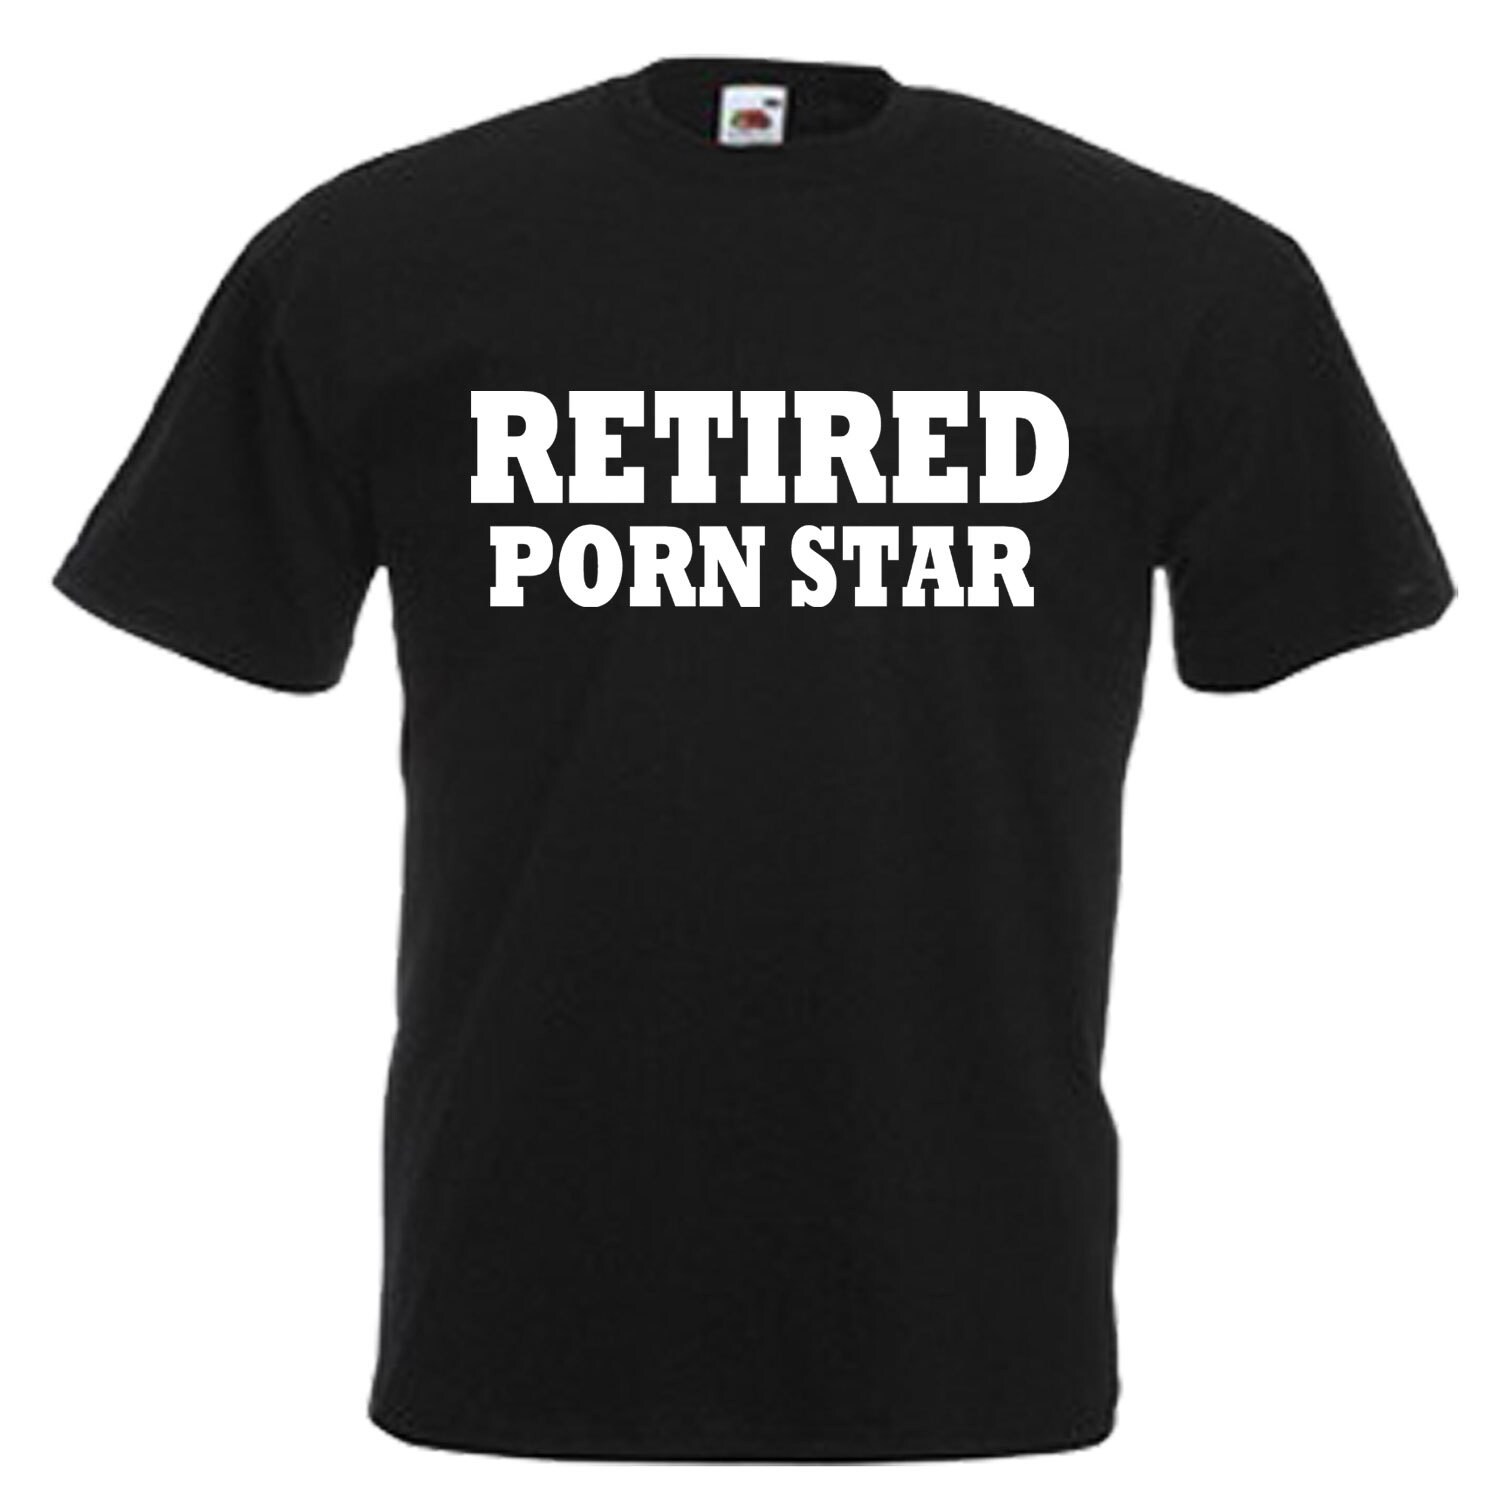 Retired Pornstar